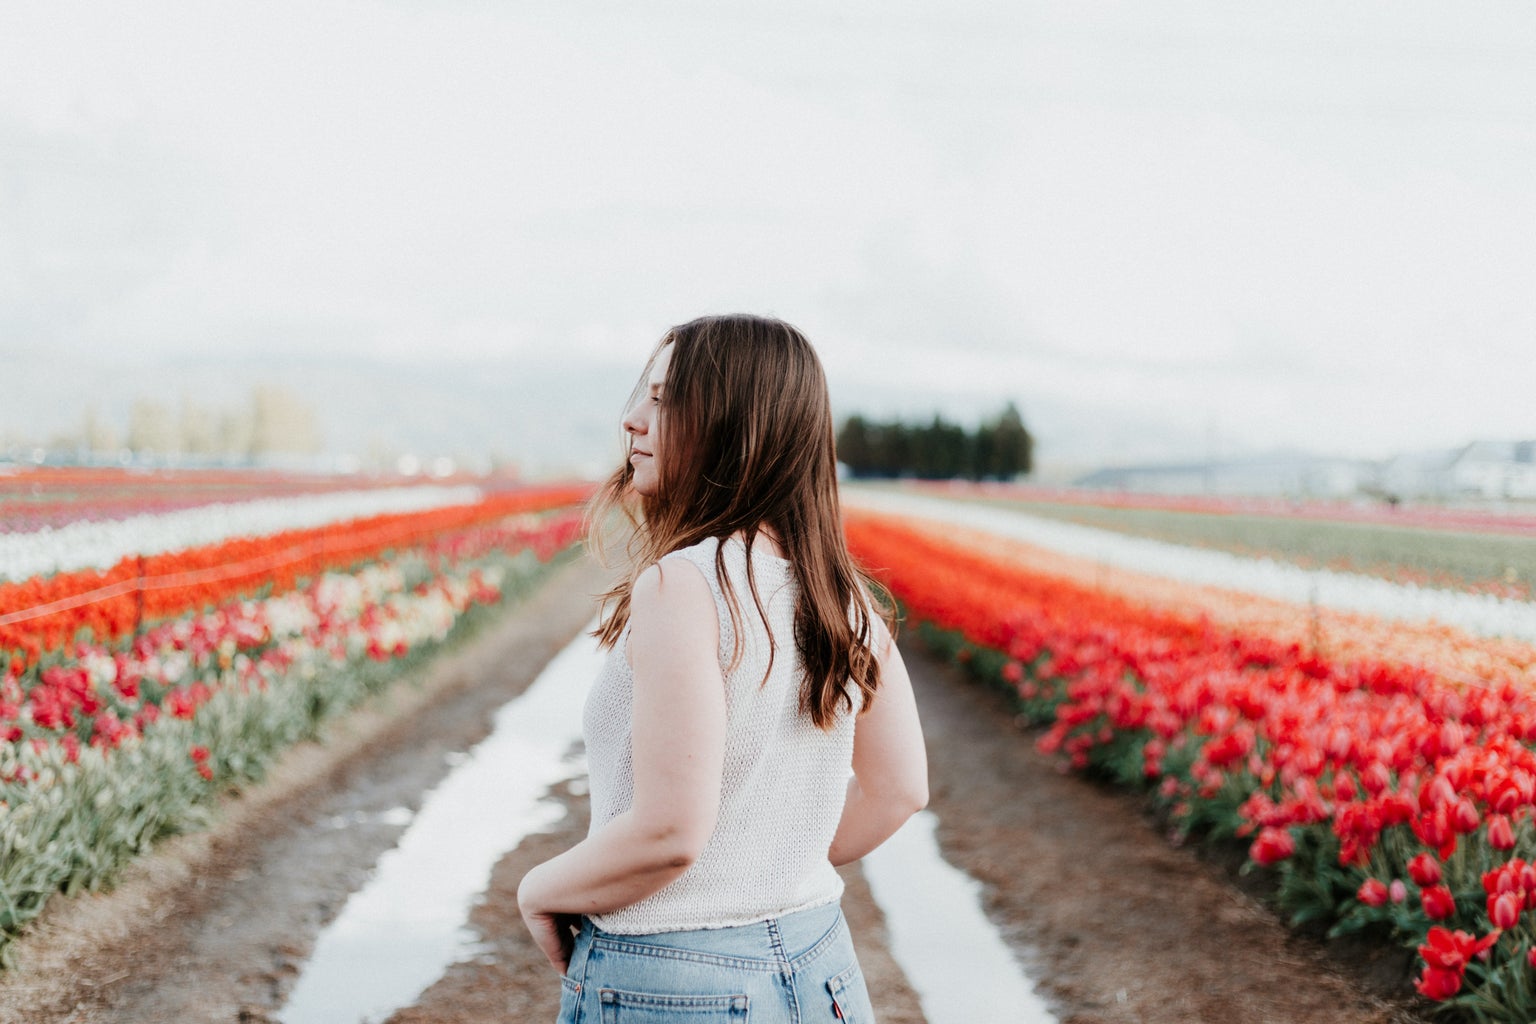 girl standing in field of flowers